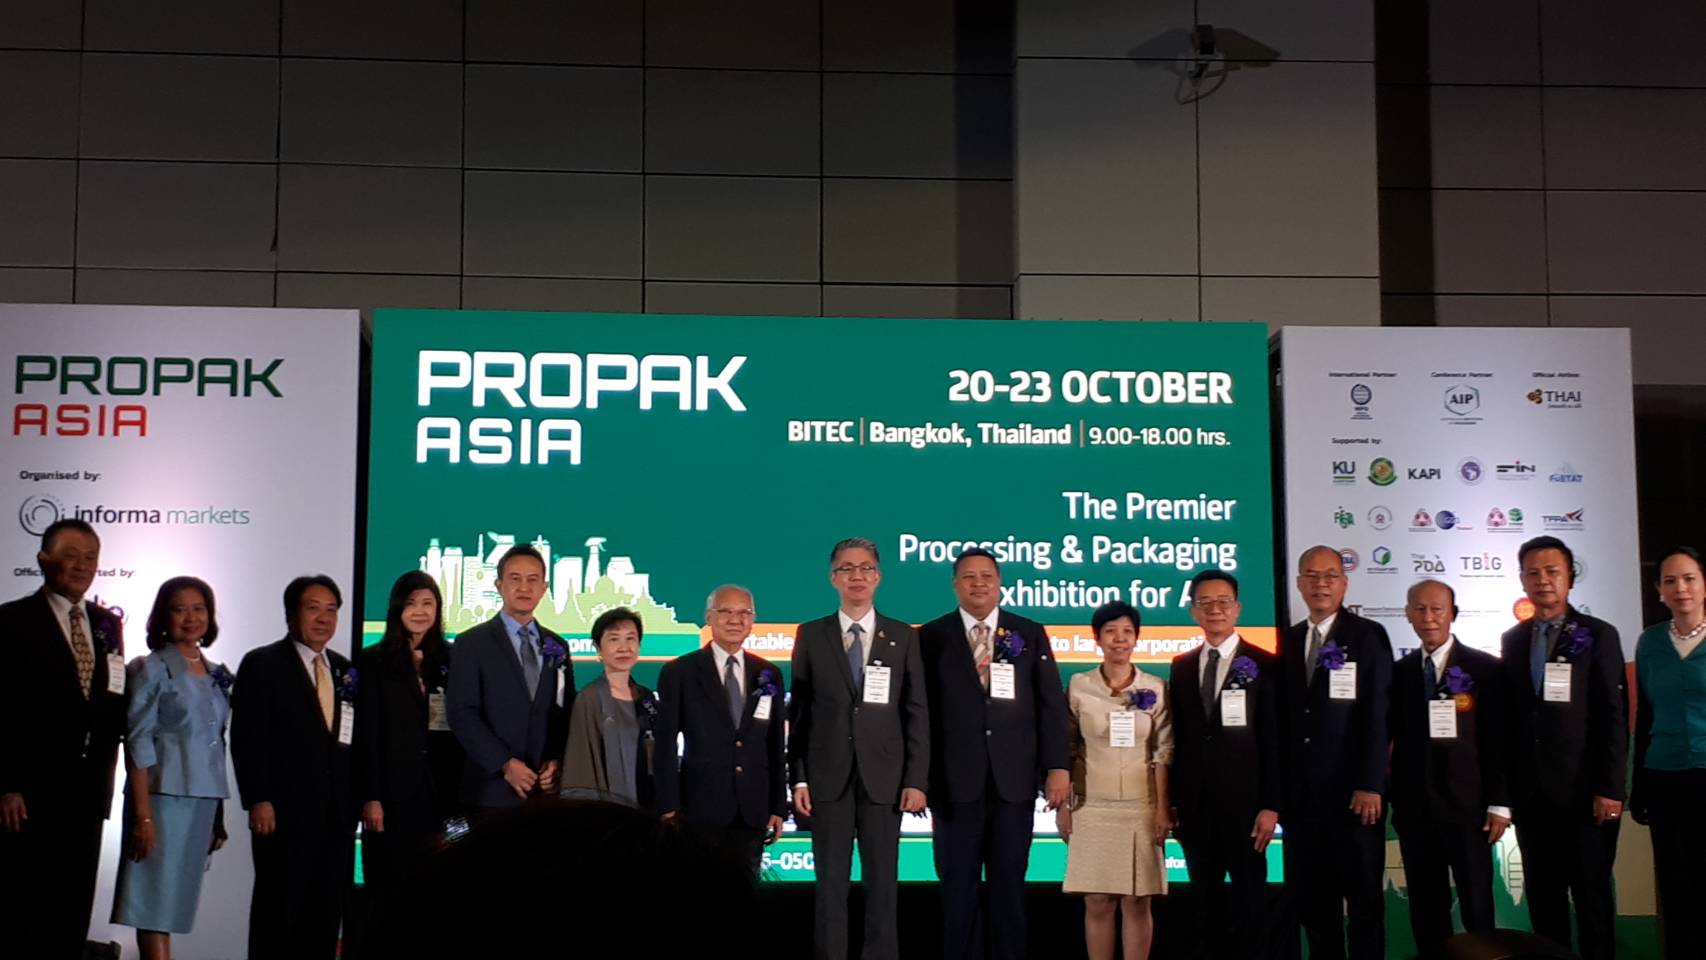 ProPak Asia 2020